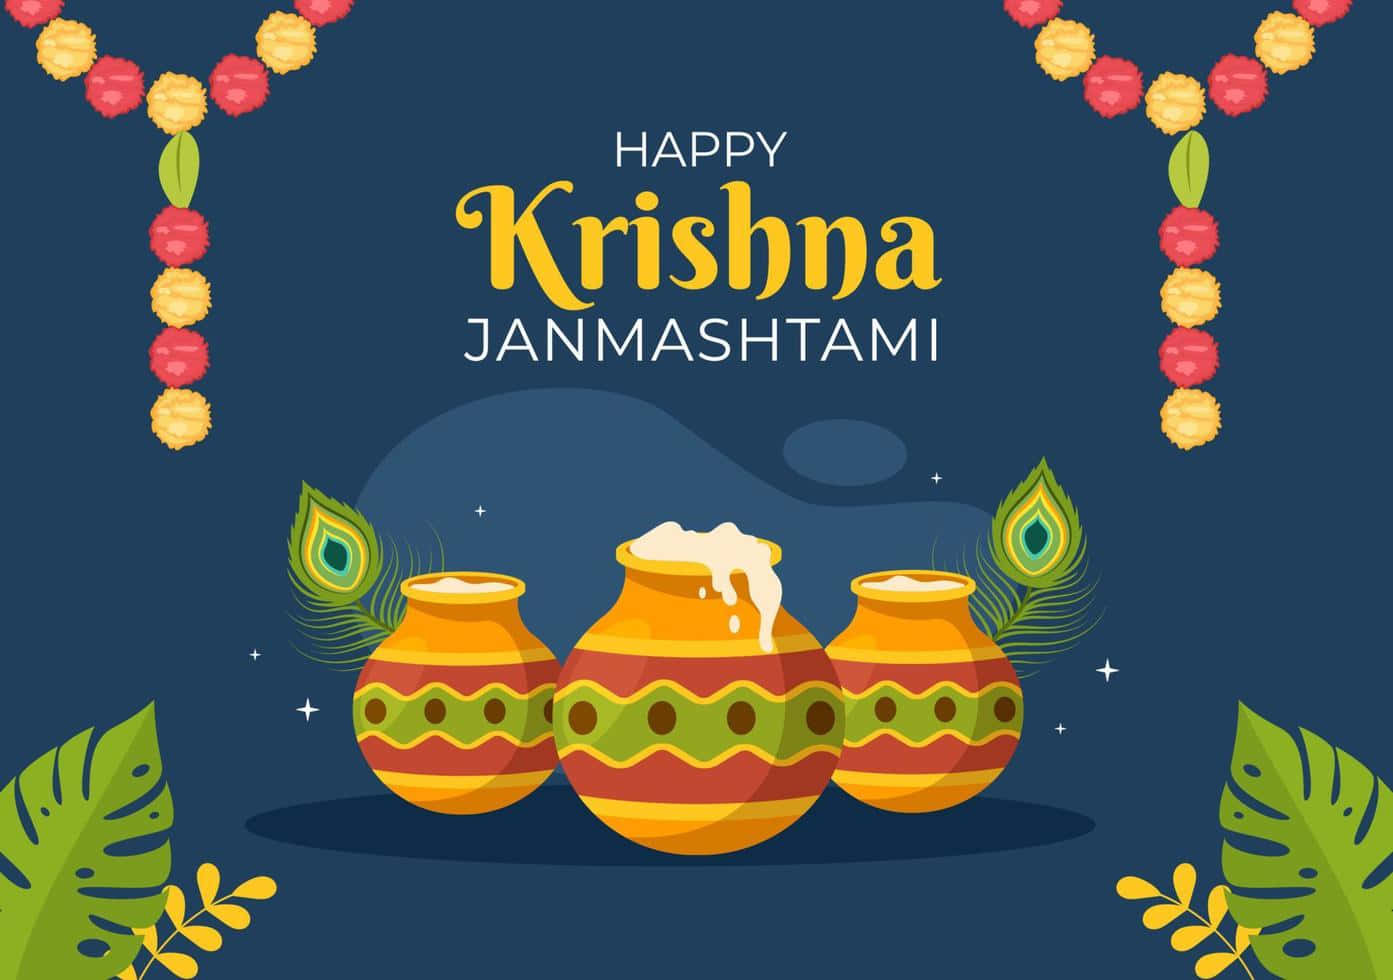 Celebrating Sri Krishna with devotion on the occasion of Janmashtami